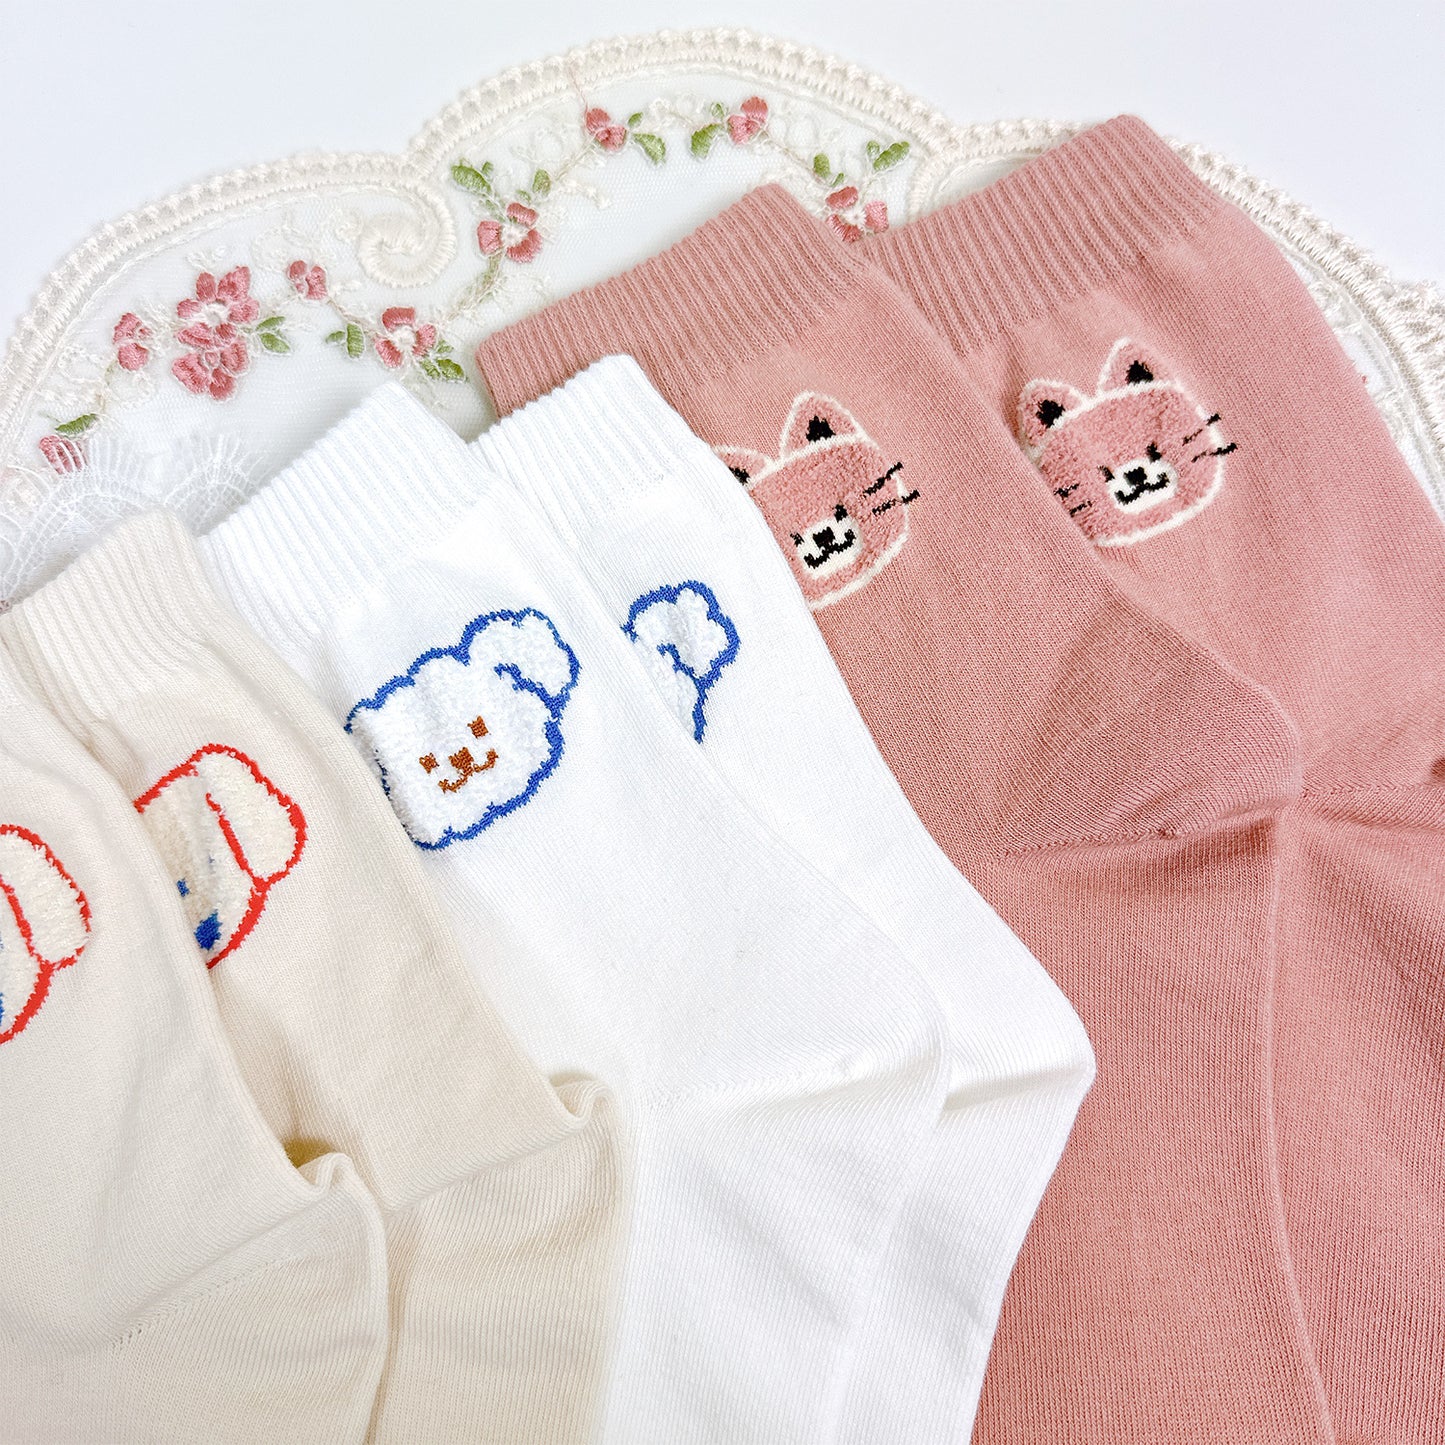 Women's Crew Line Pop-up Animal Socks - Made in Korea